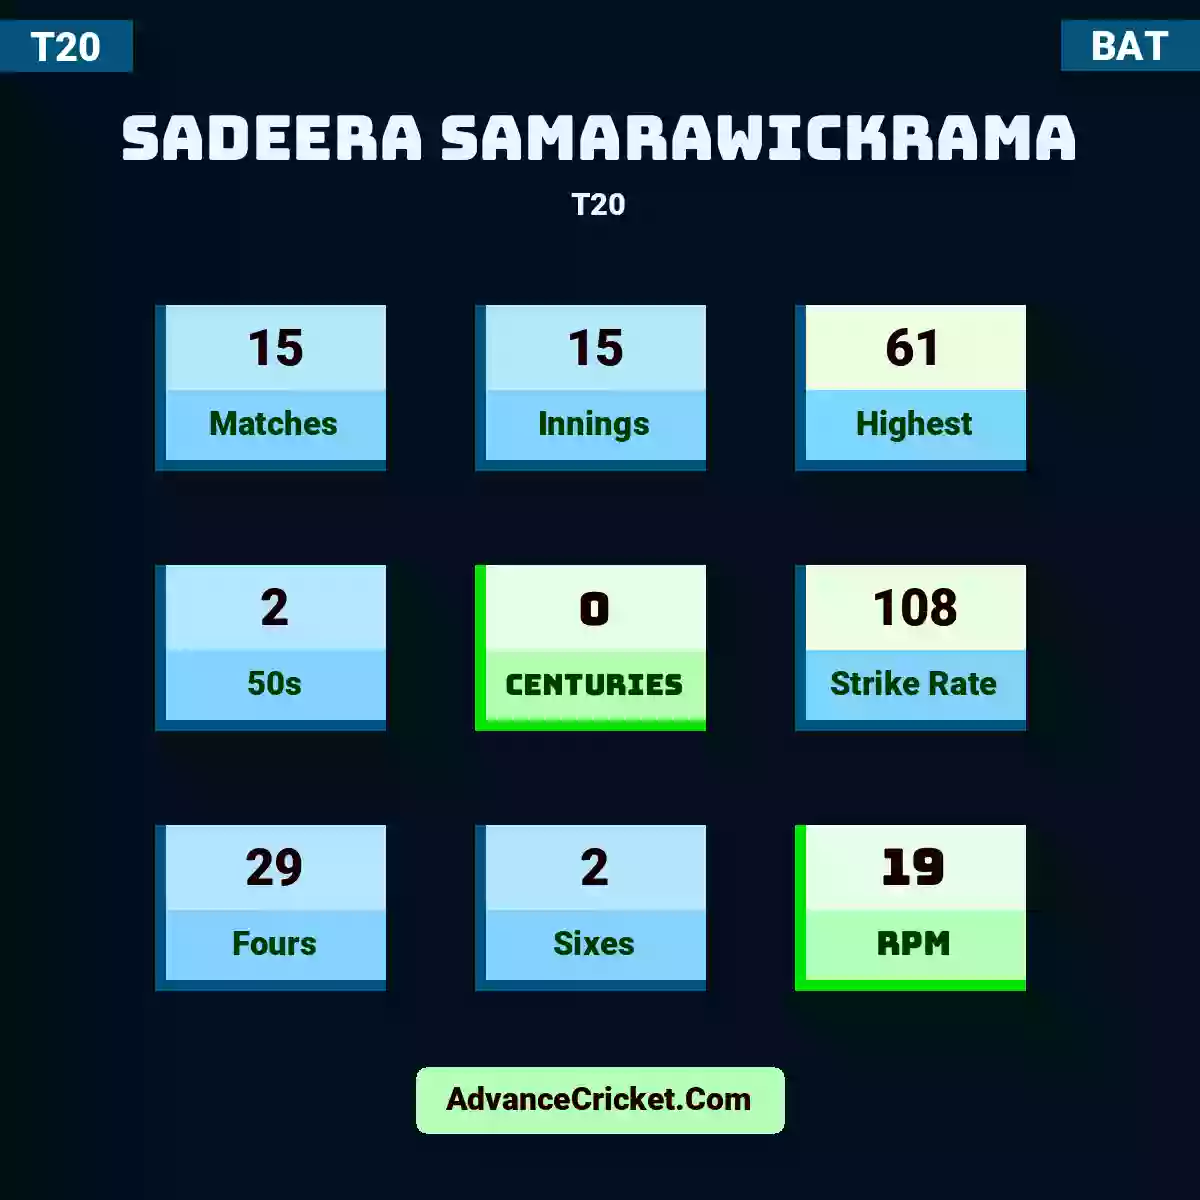 Sadeera Samarawickrama T20 , Sadeera Samarawickrama played 15 matches, scored 61 runs as highest, 2 half-centuries, and 0 centuries, with a strike rate of 108. S.Samarawickrama hit 29 fours and 2 sixes, with an RPM of 19.